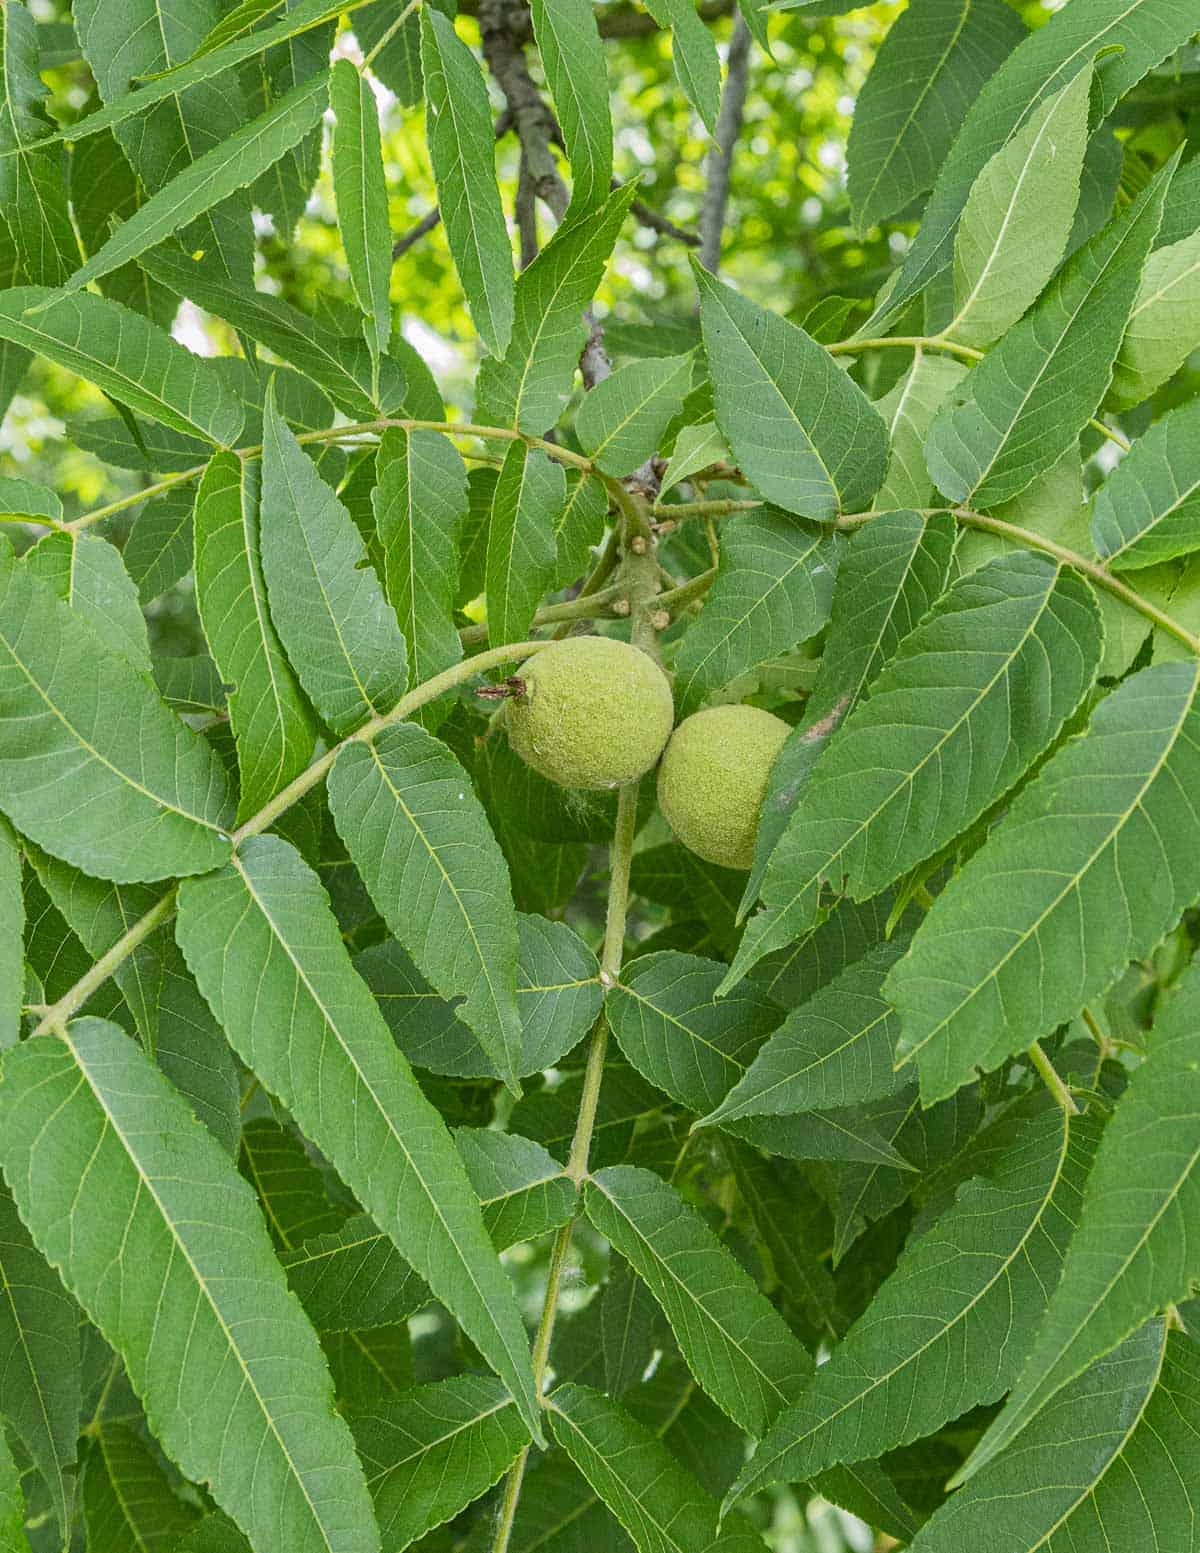 Black walnut tree leaves with green unripe nuts. 